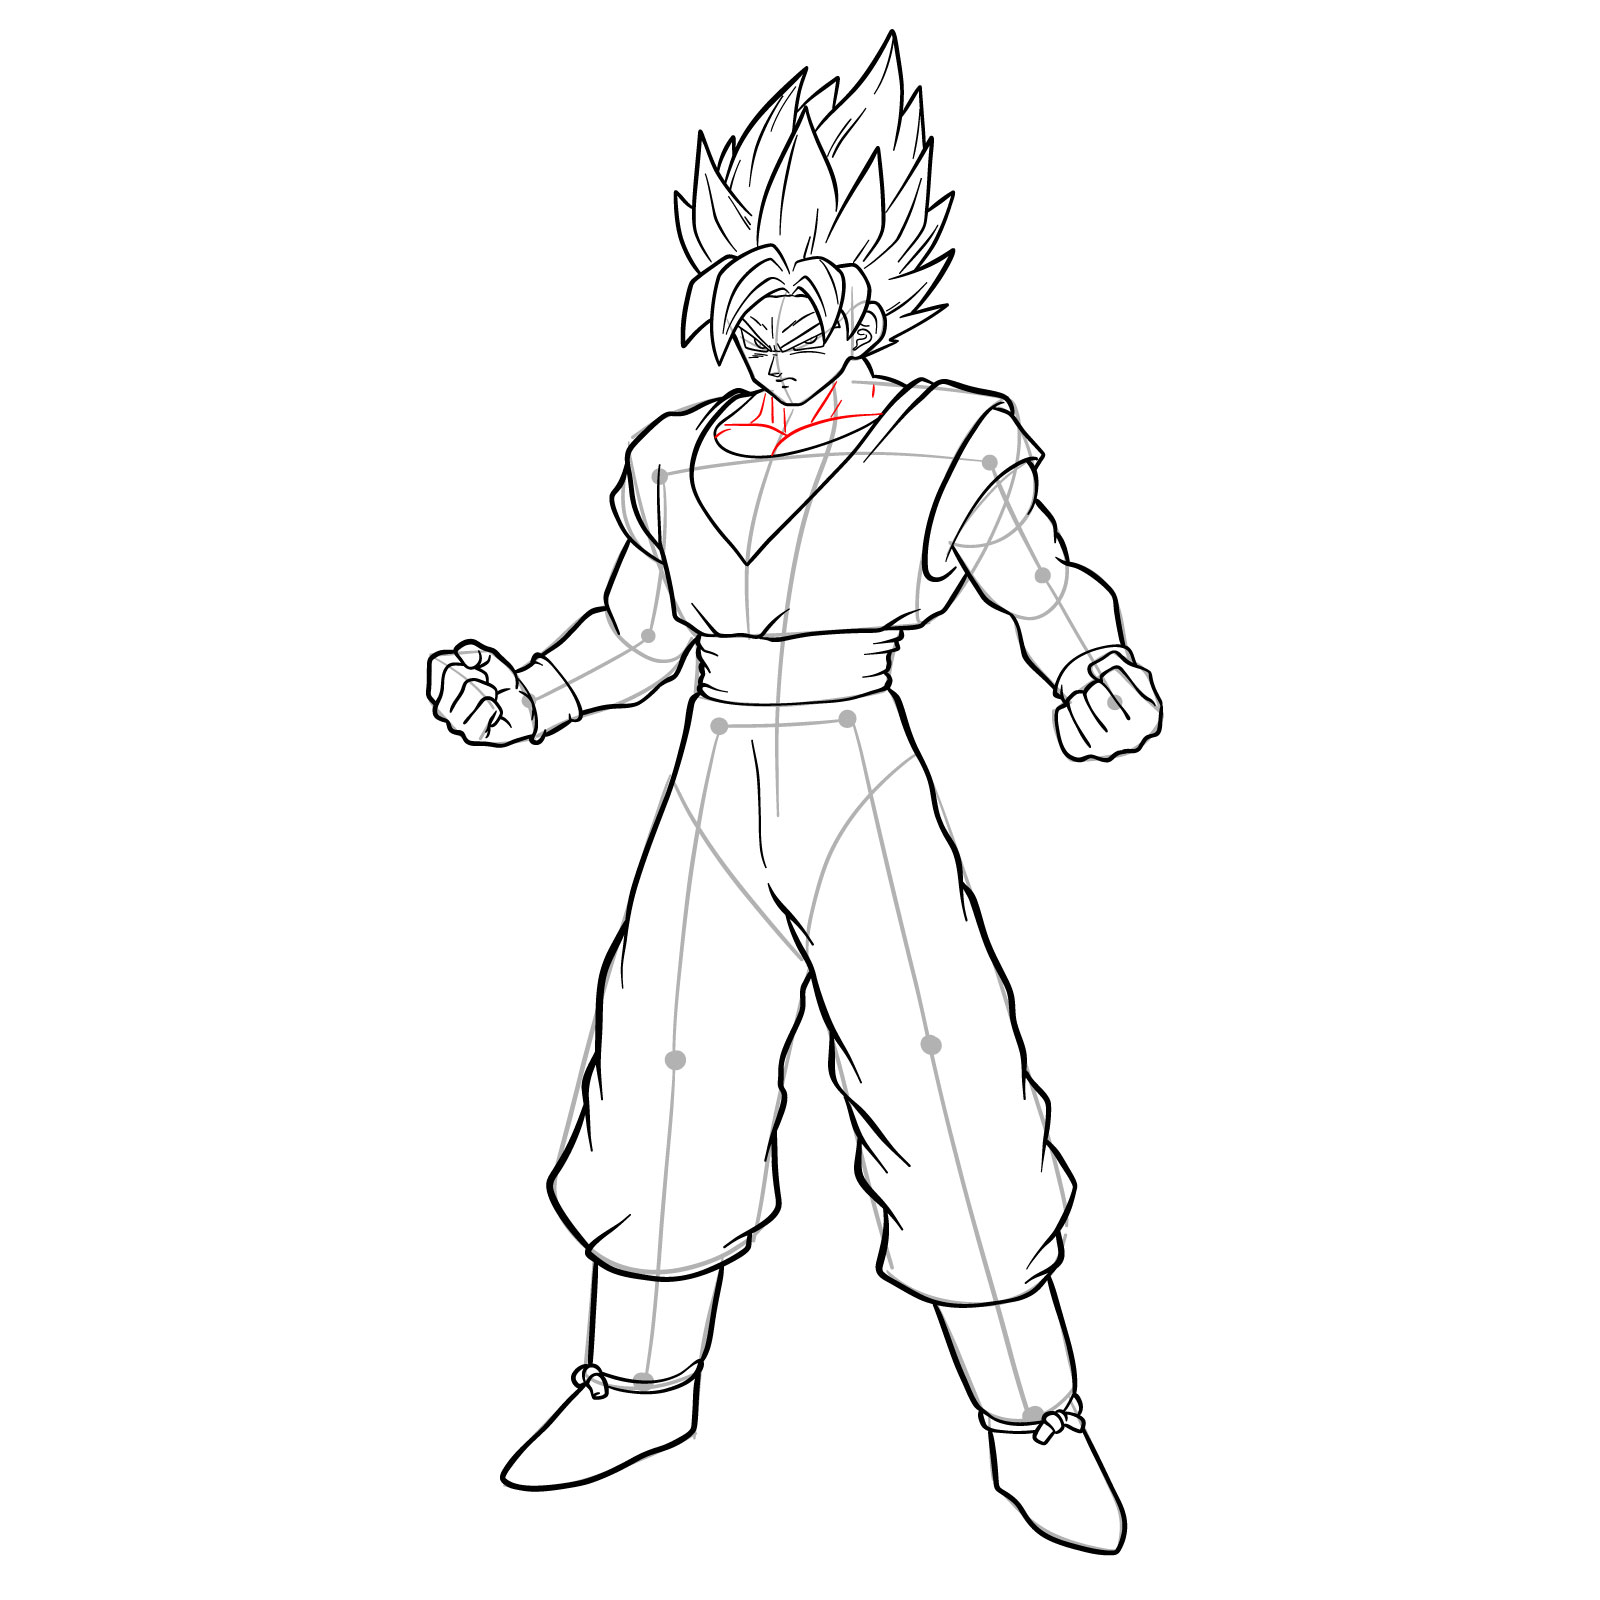 How to draw Goku in Super Saiyan form - step 34